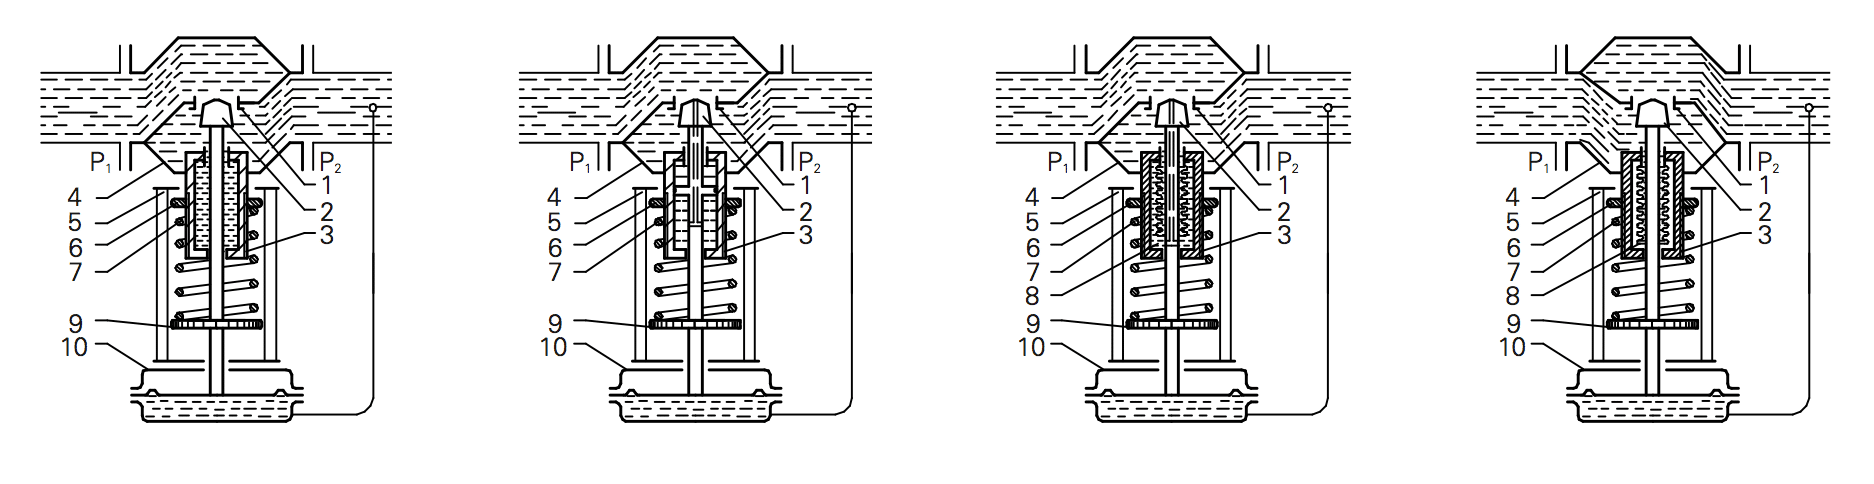 different self acting pressure control valves1